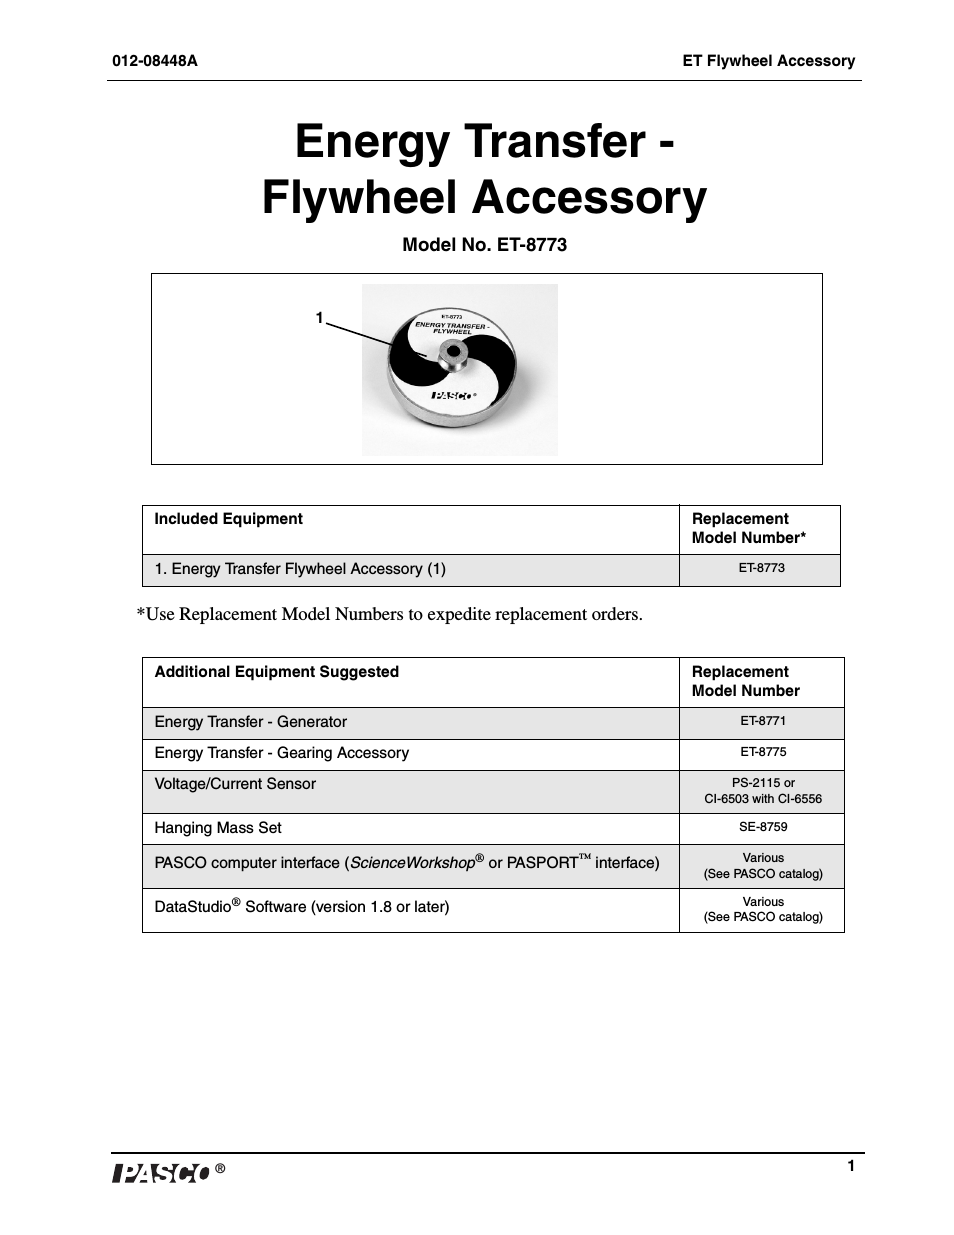 ET-8773 Energy Transfer - Flywheel Accessory